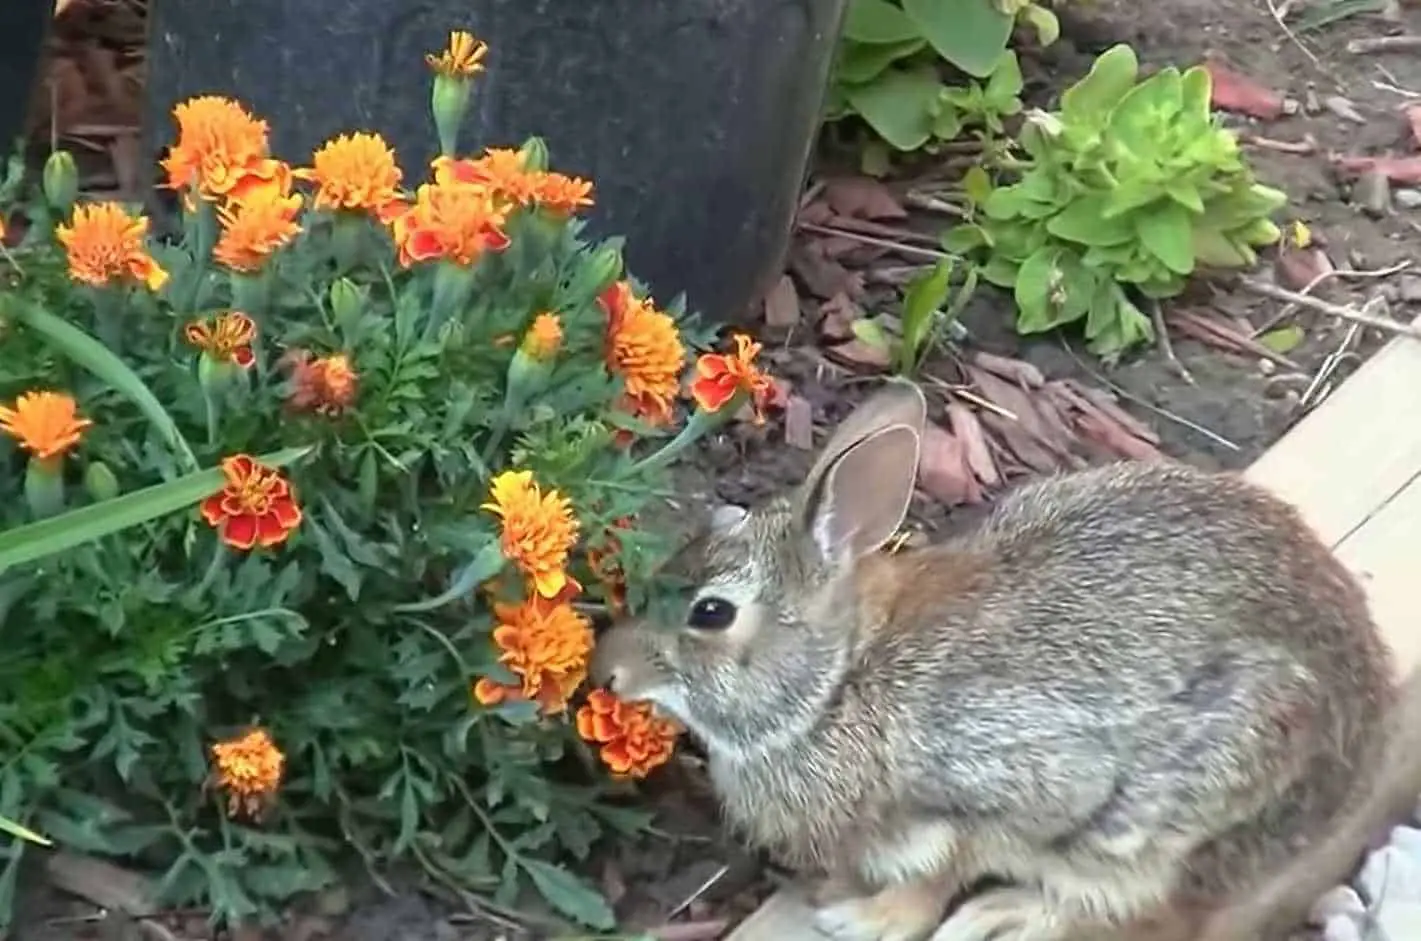 can rabbits eat marigolds